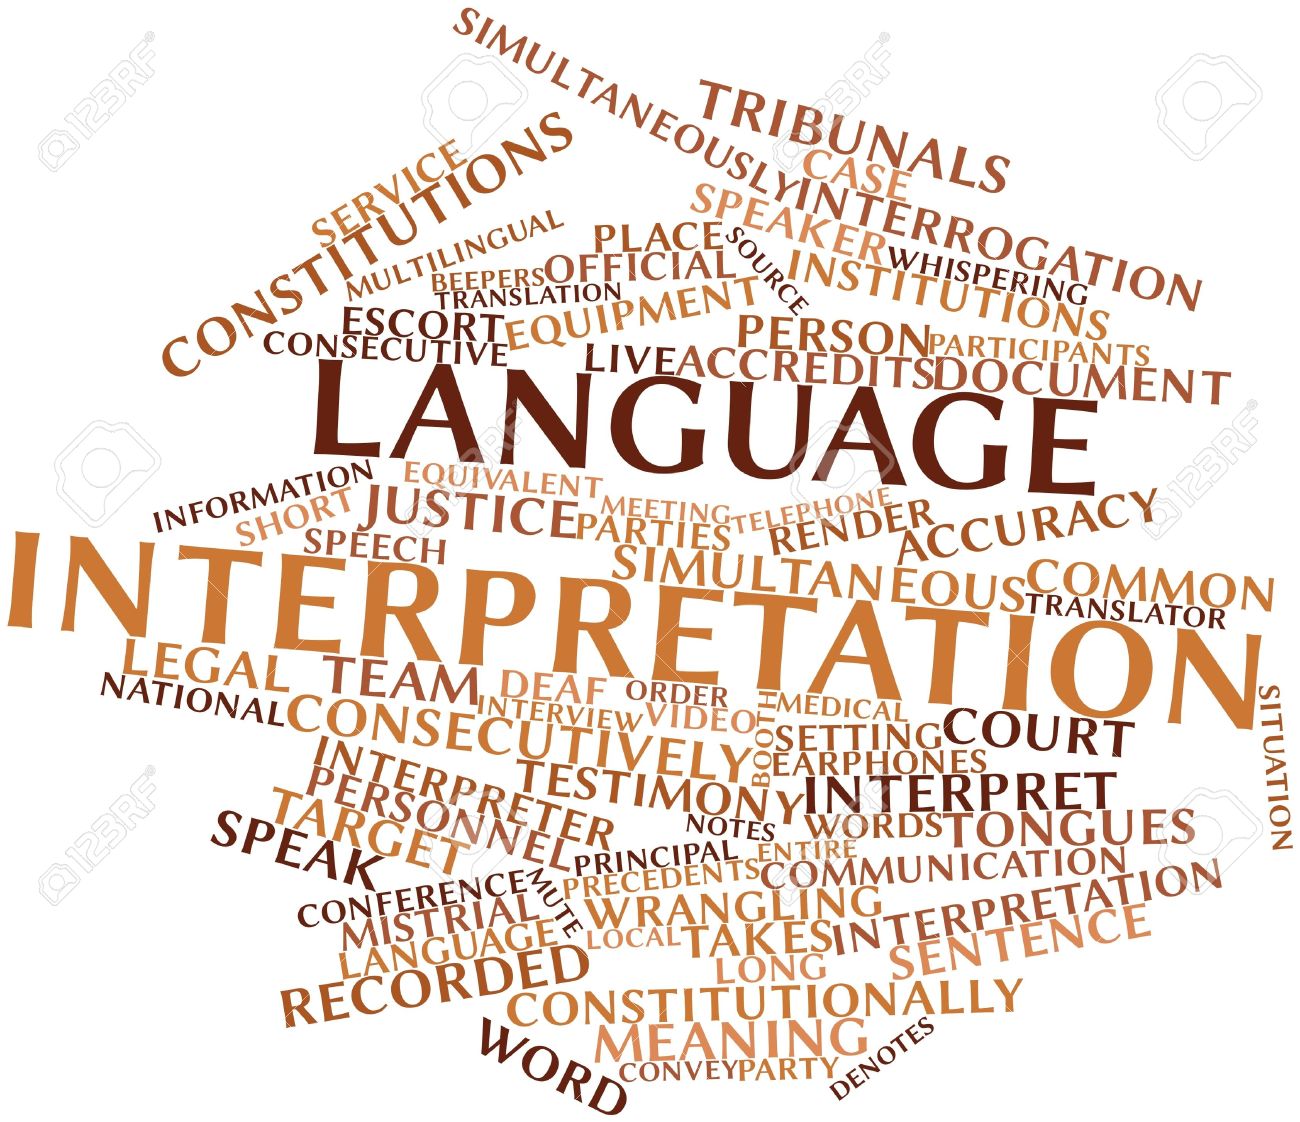 language interpretation